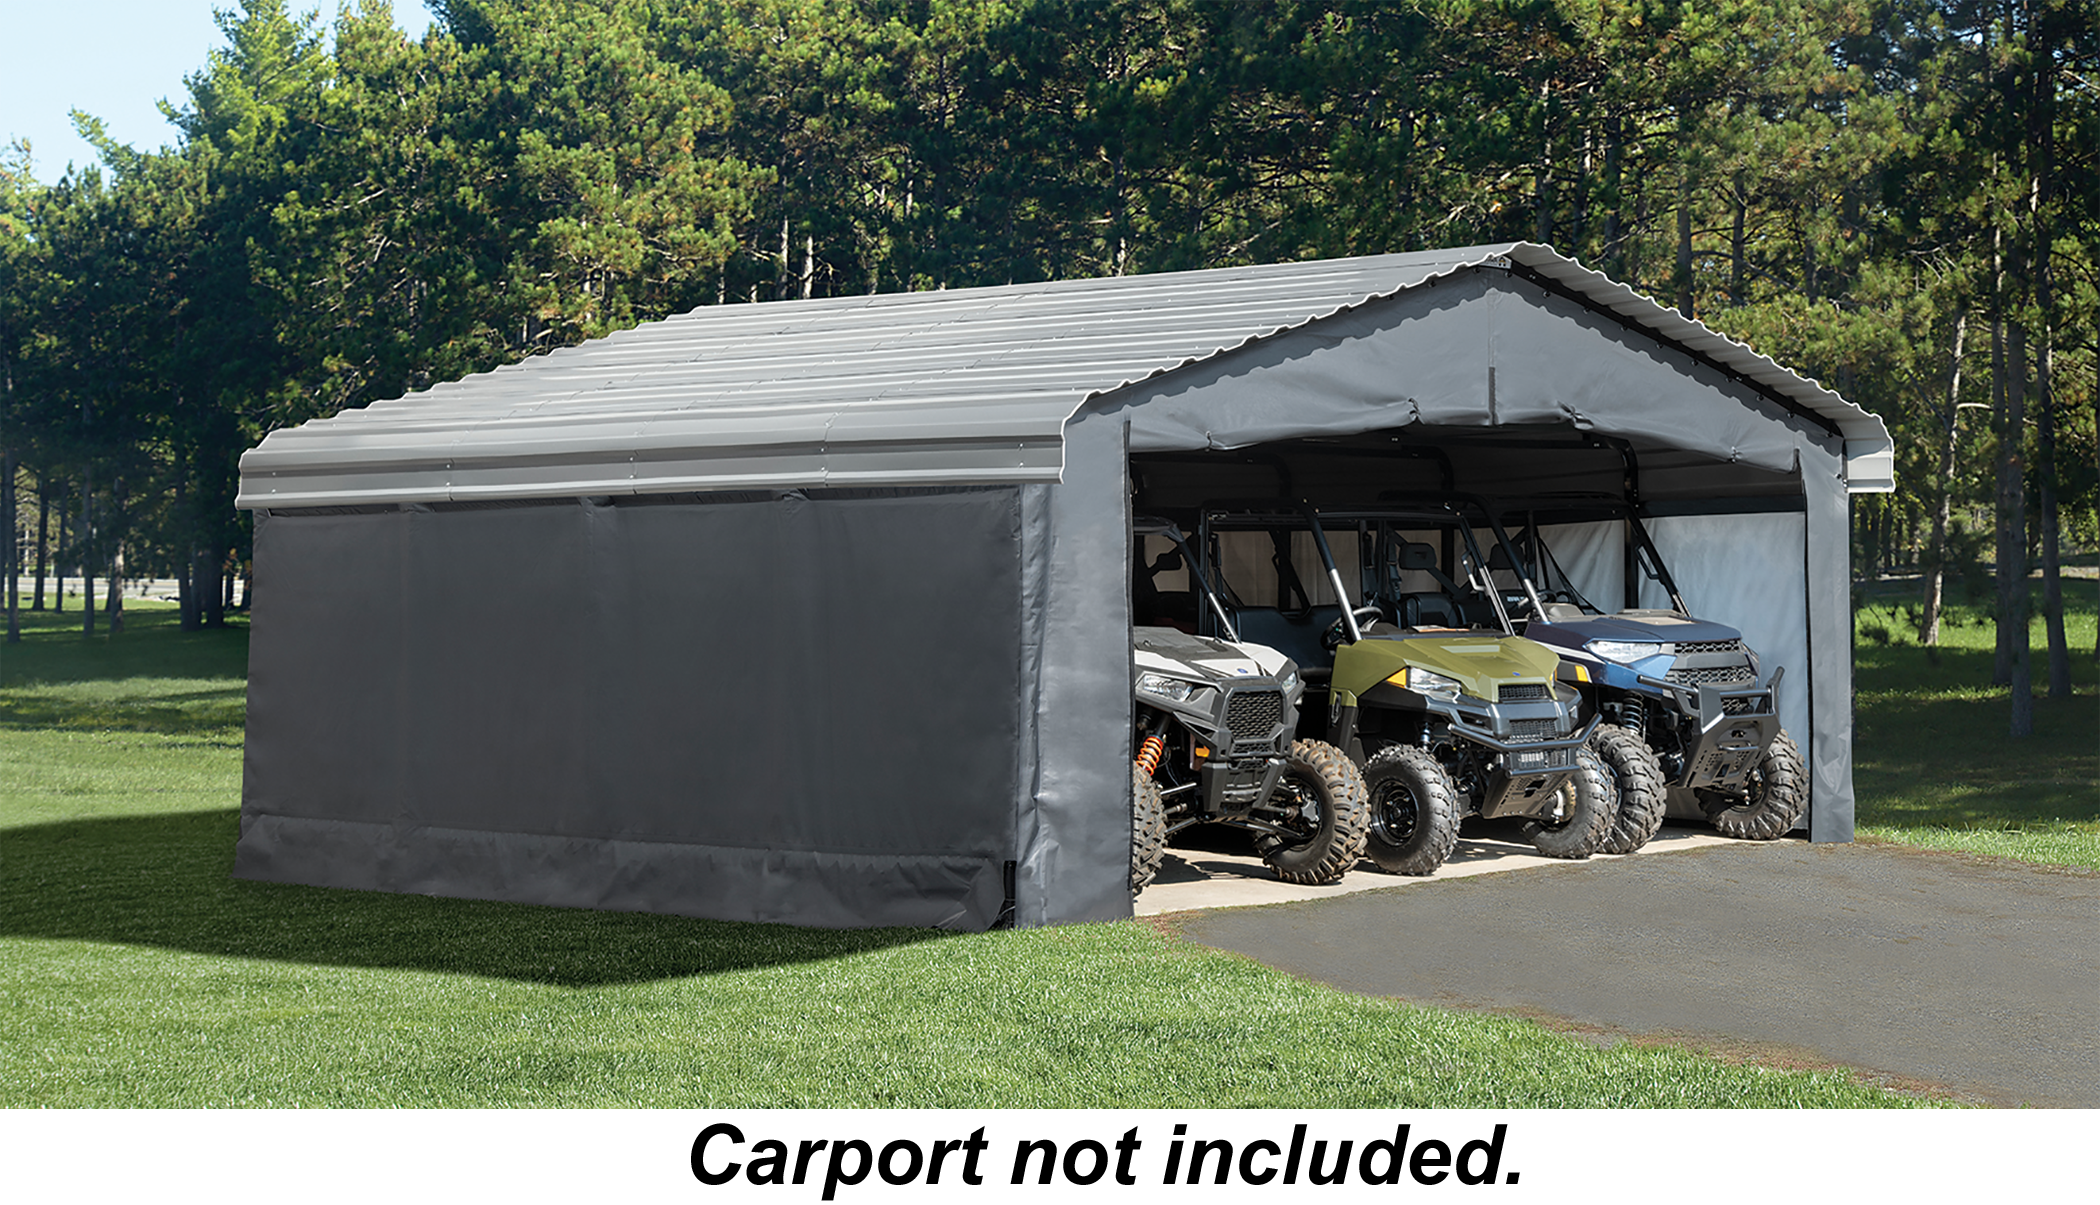 ShelterLogic Fabric Enclosure Kit for Arrow Carport - Gray - 20' x 20' x 10